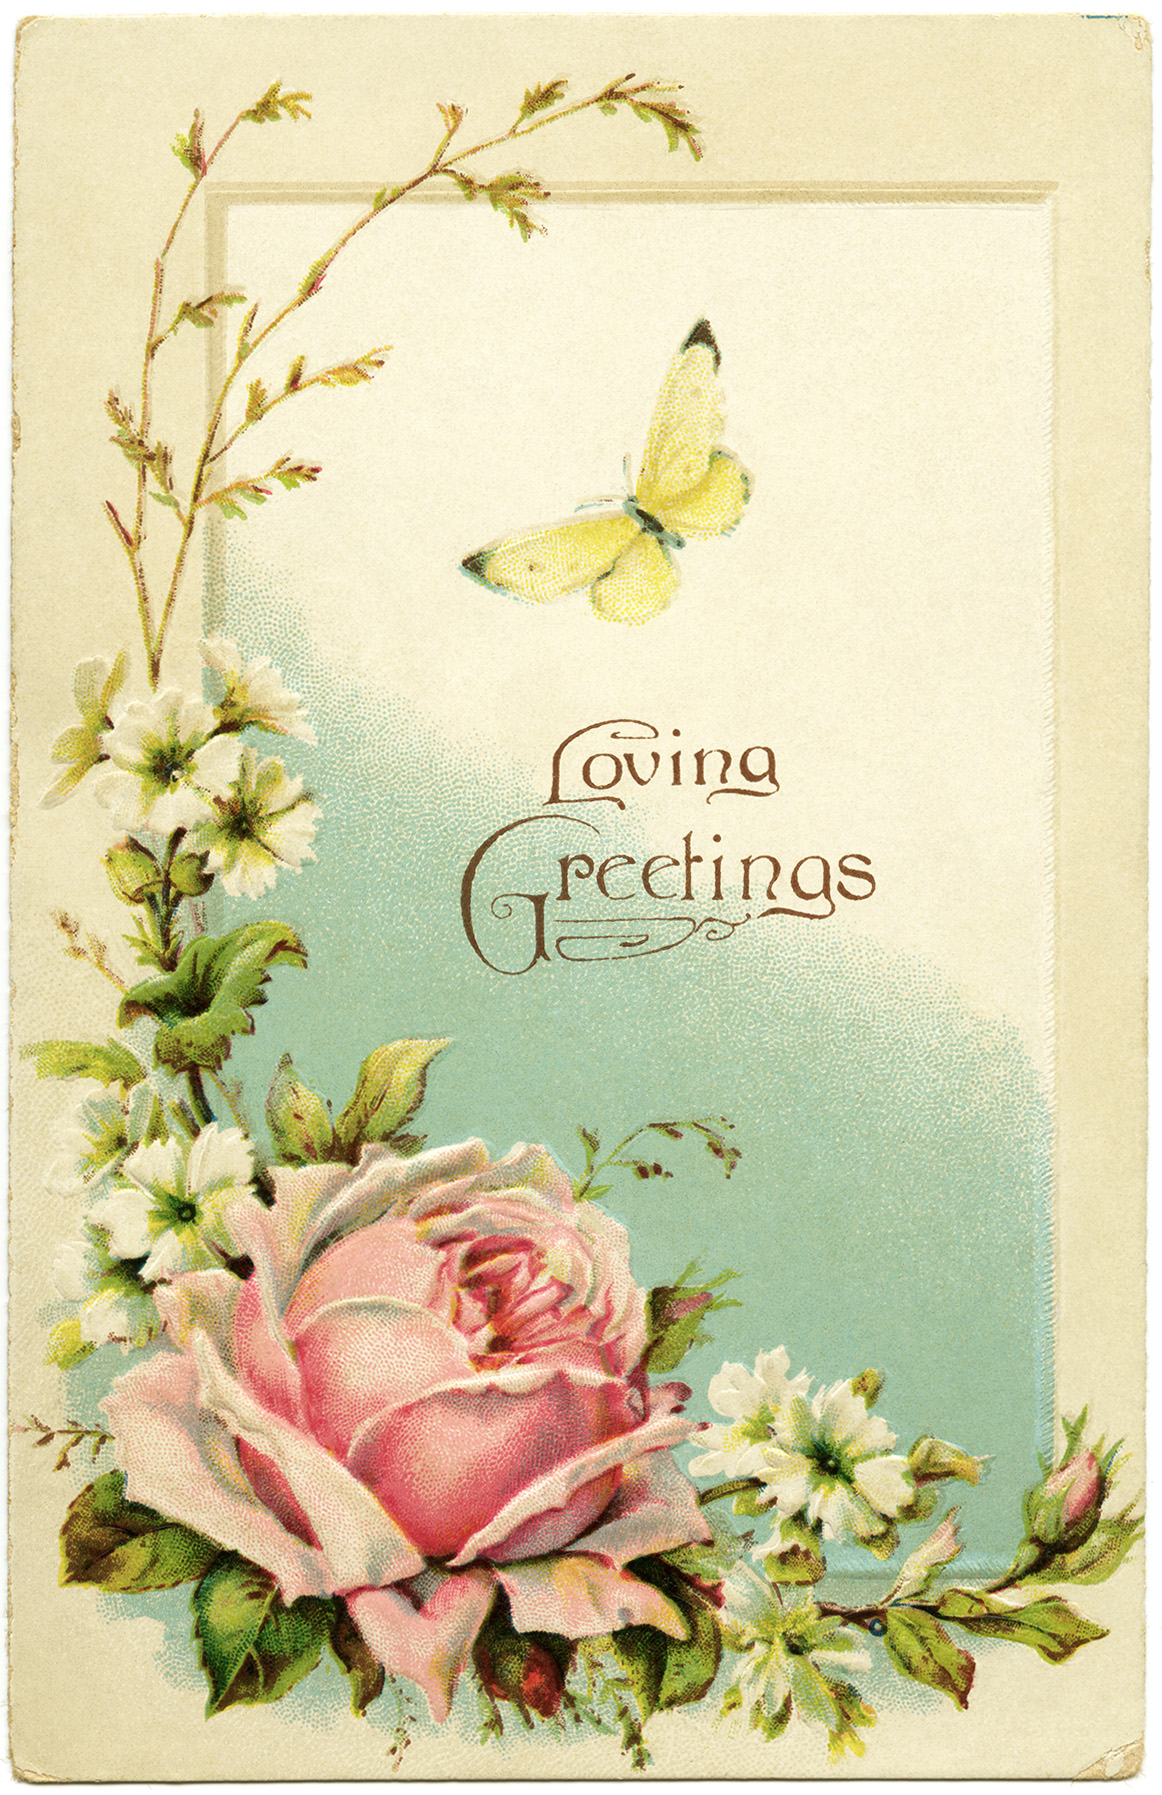 free vintage clip art postcards - photo #36